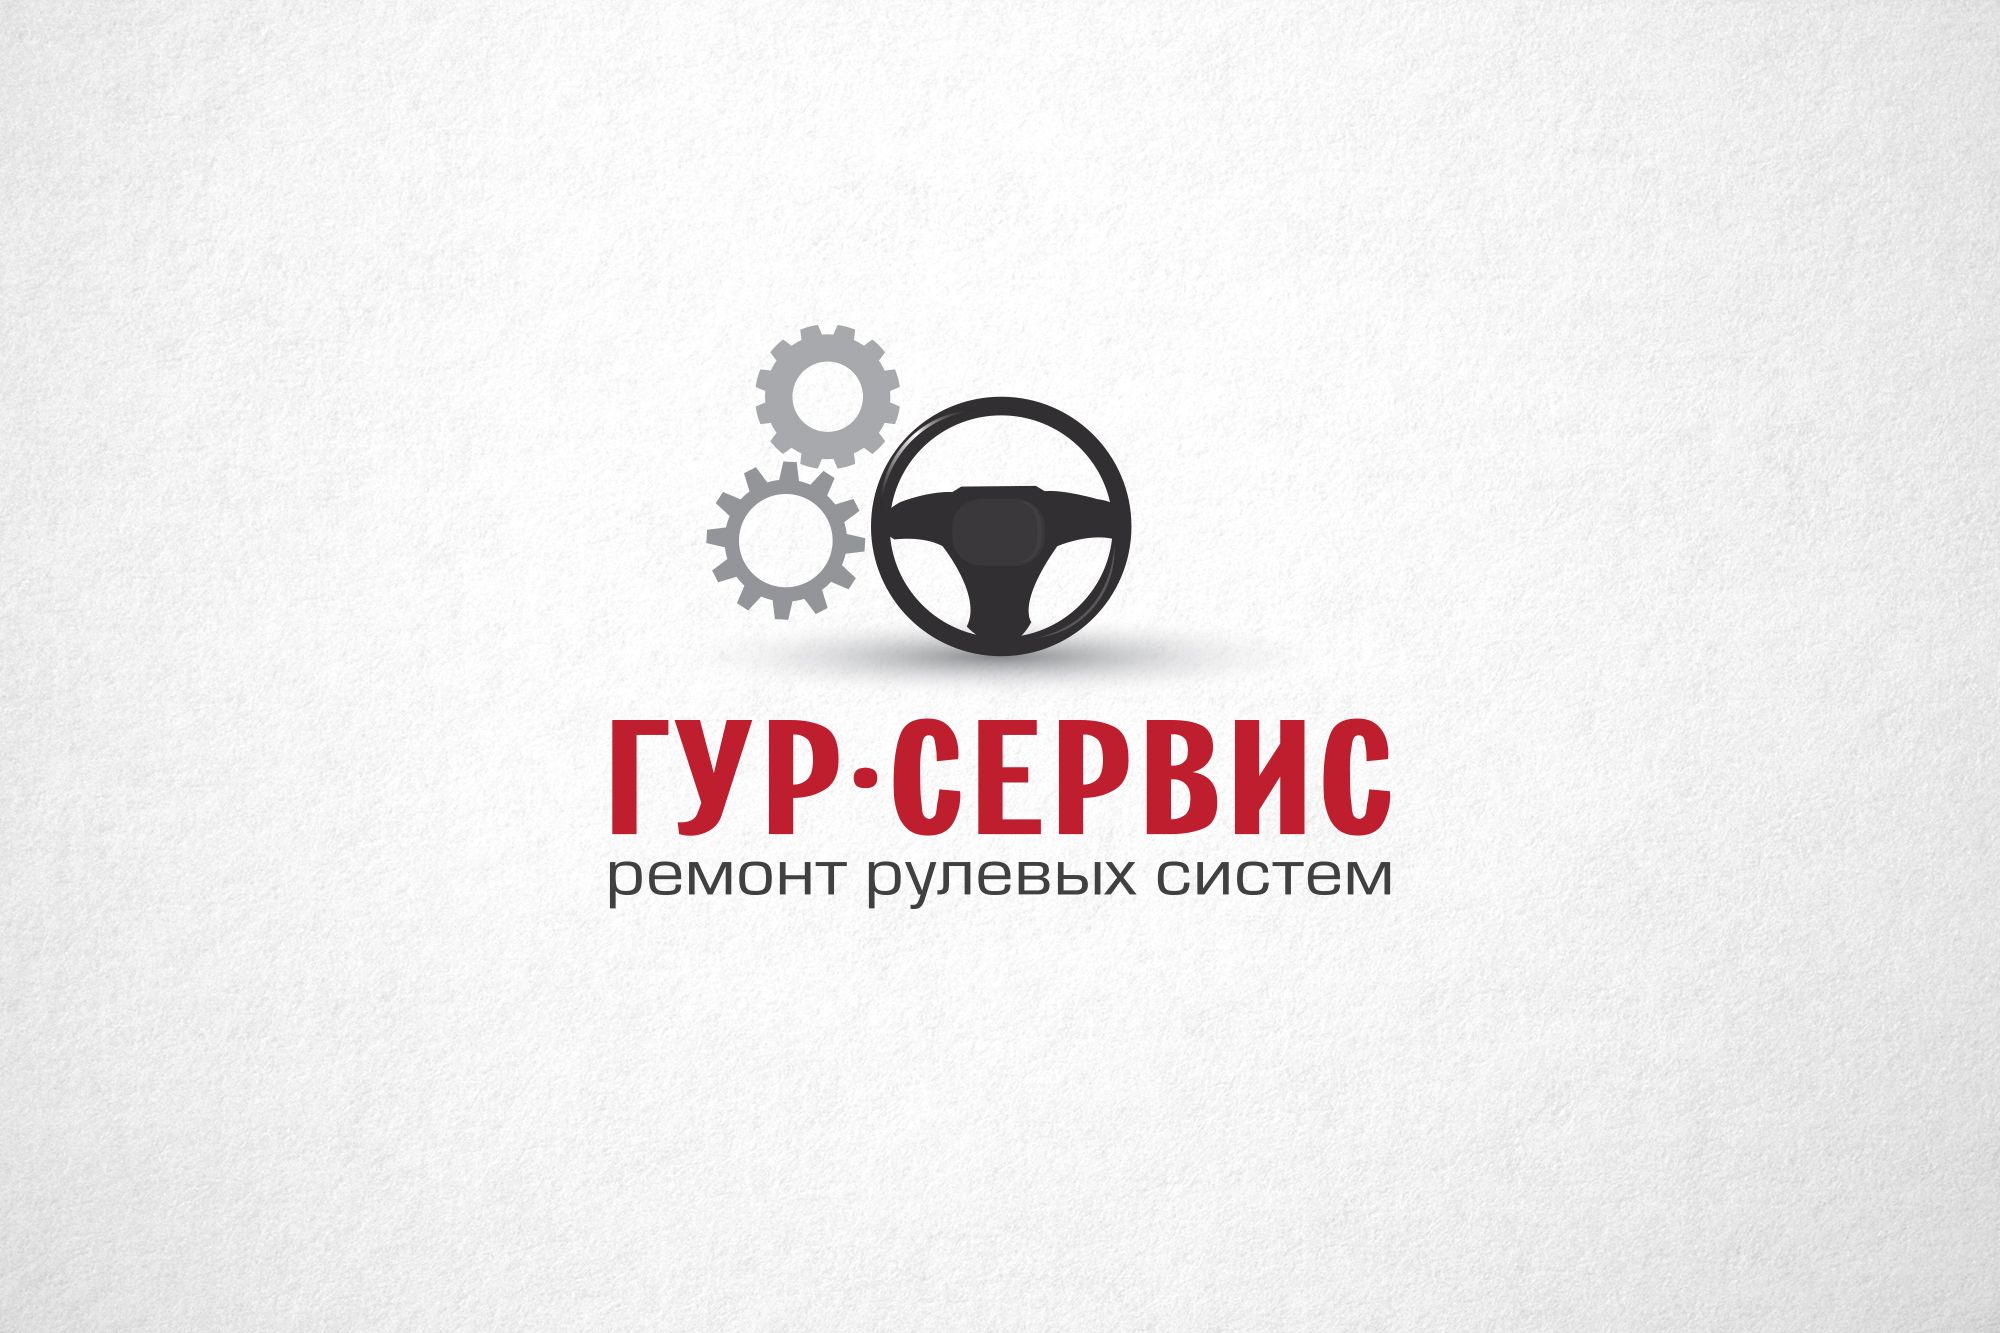 Логотип для ГУР-СЕРВИС - дизайнер funkielevis